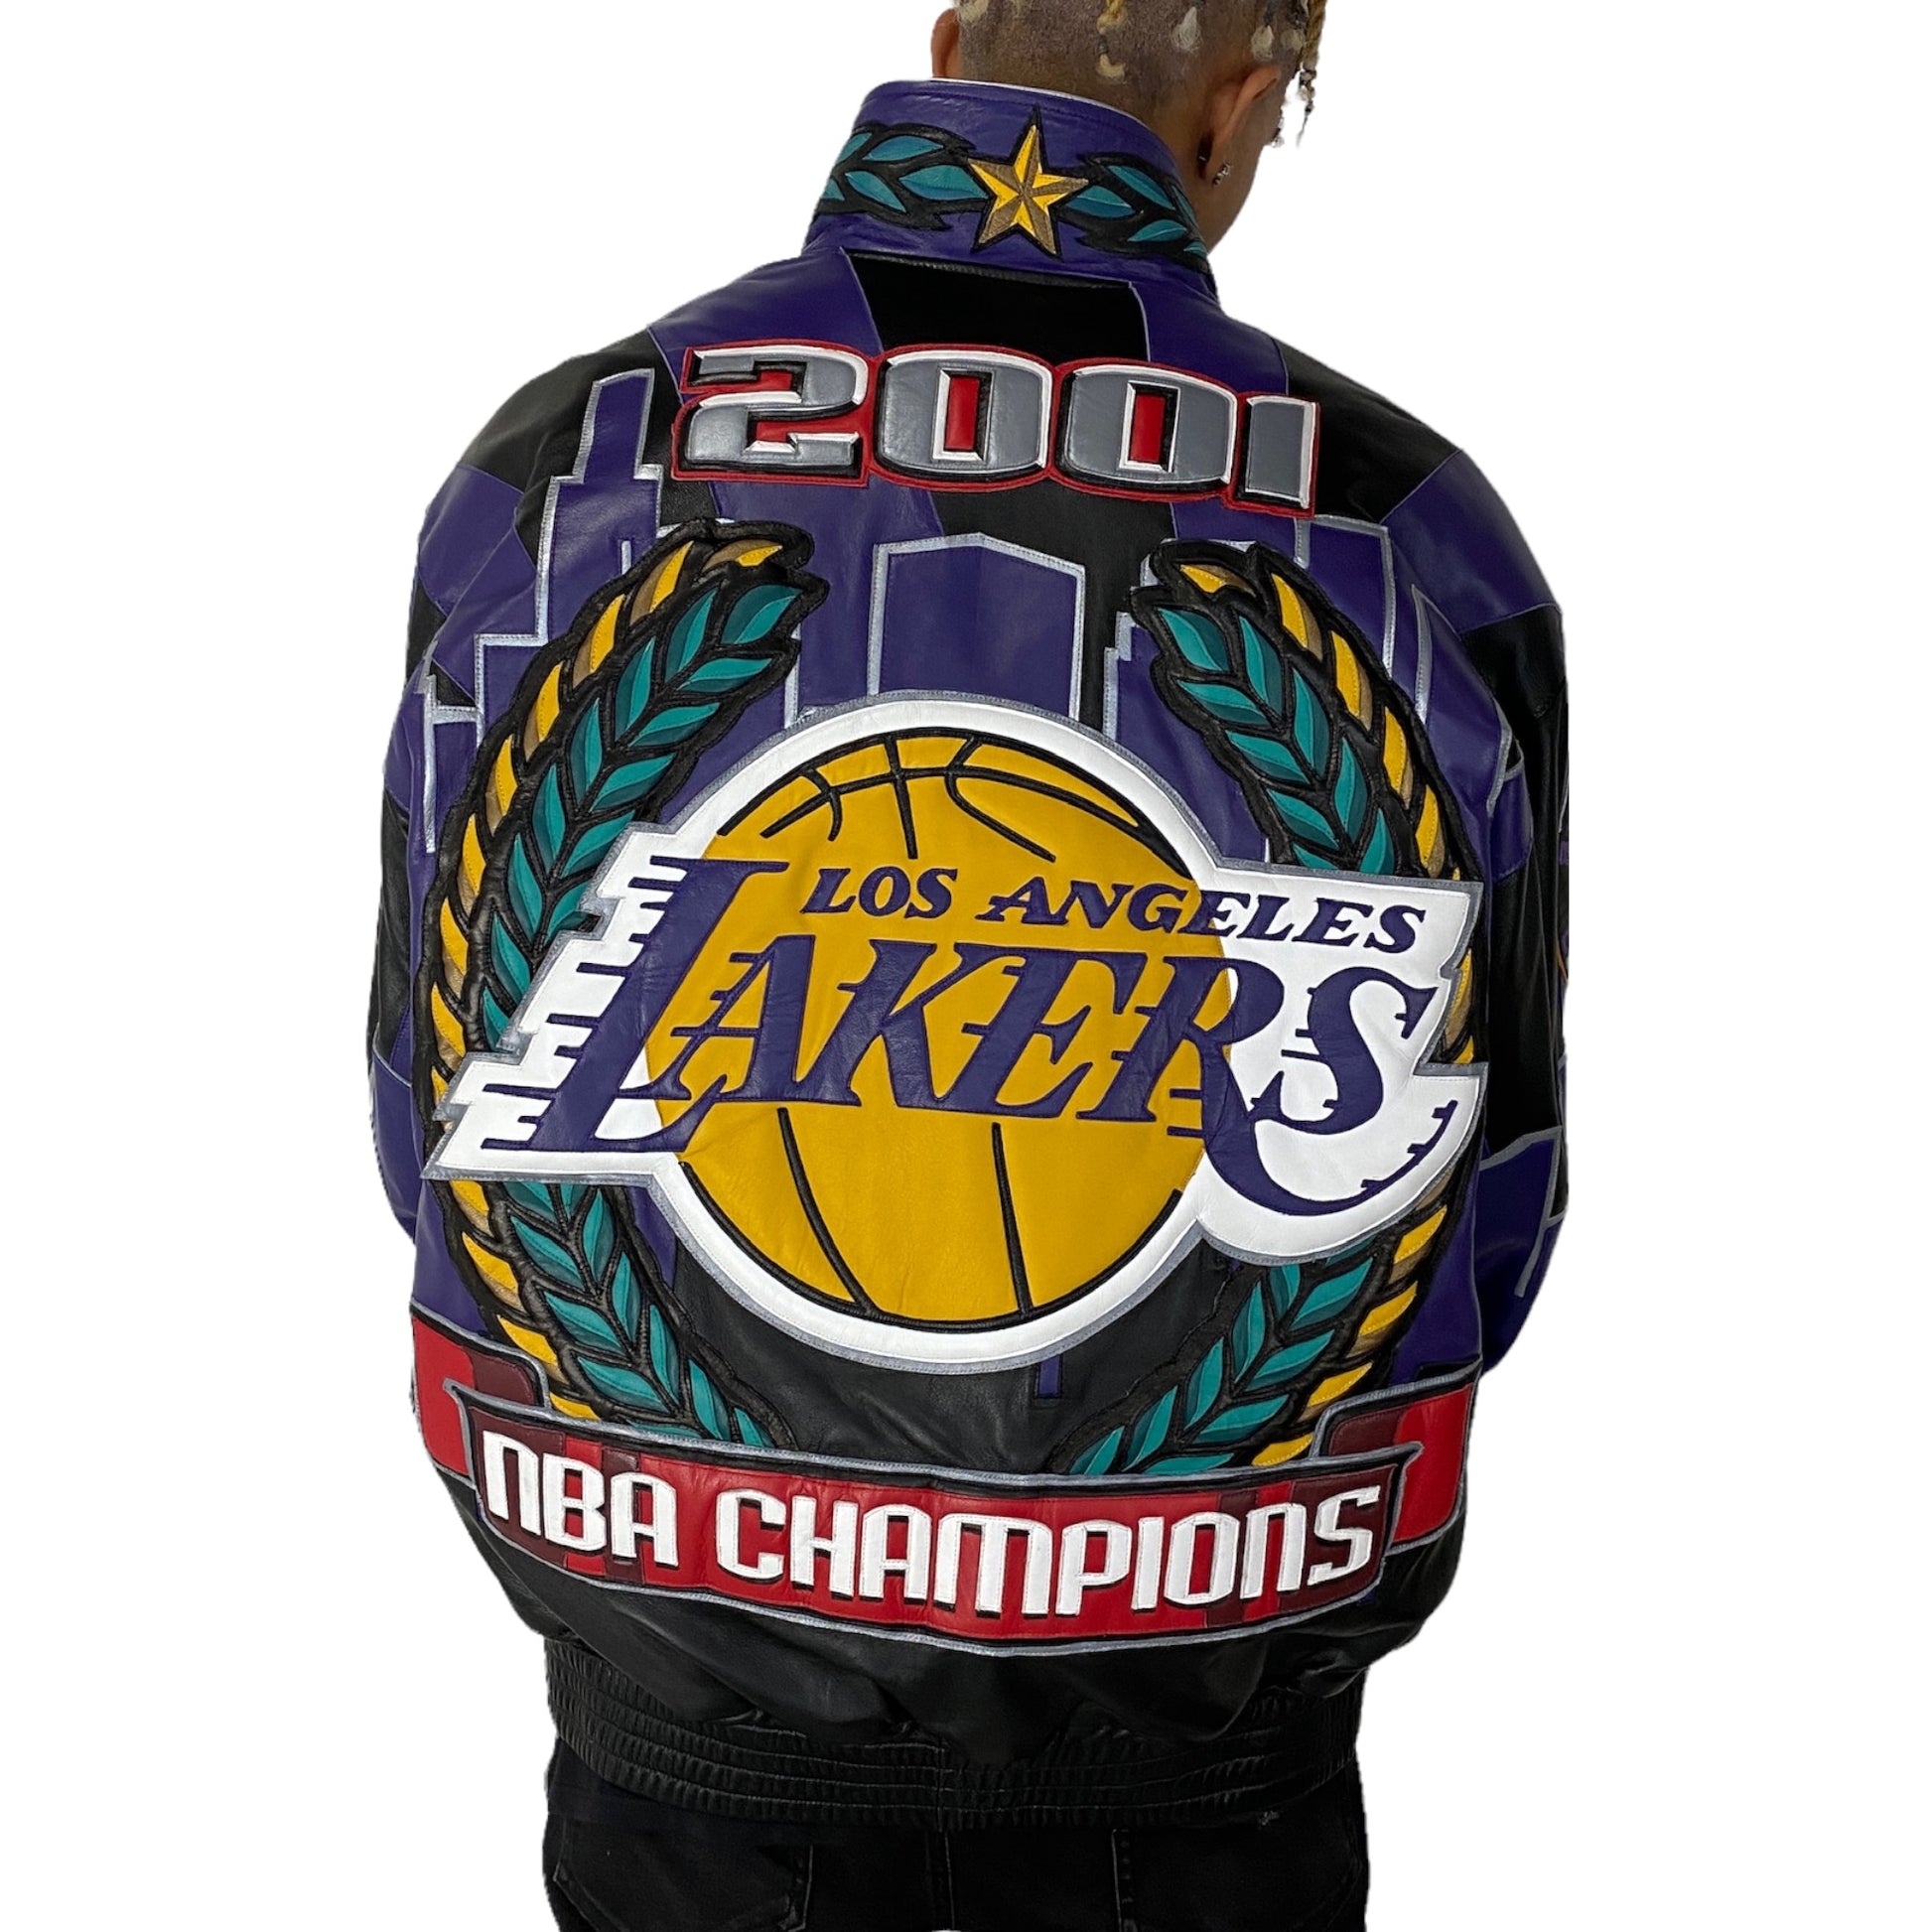 Lakers Back 2 Back Championship Jacket - LA Lakers 2001 Leather Jacket